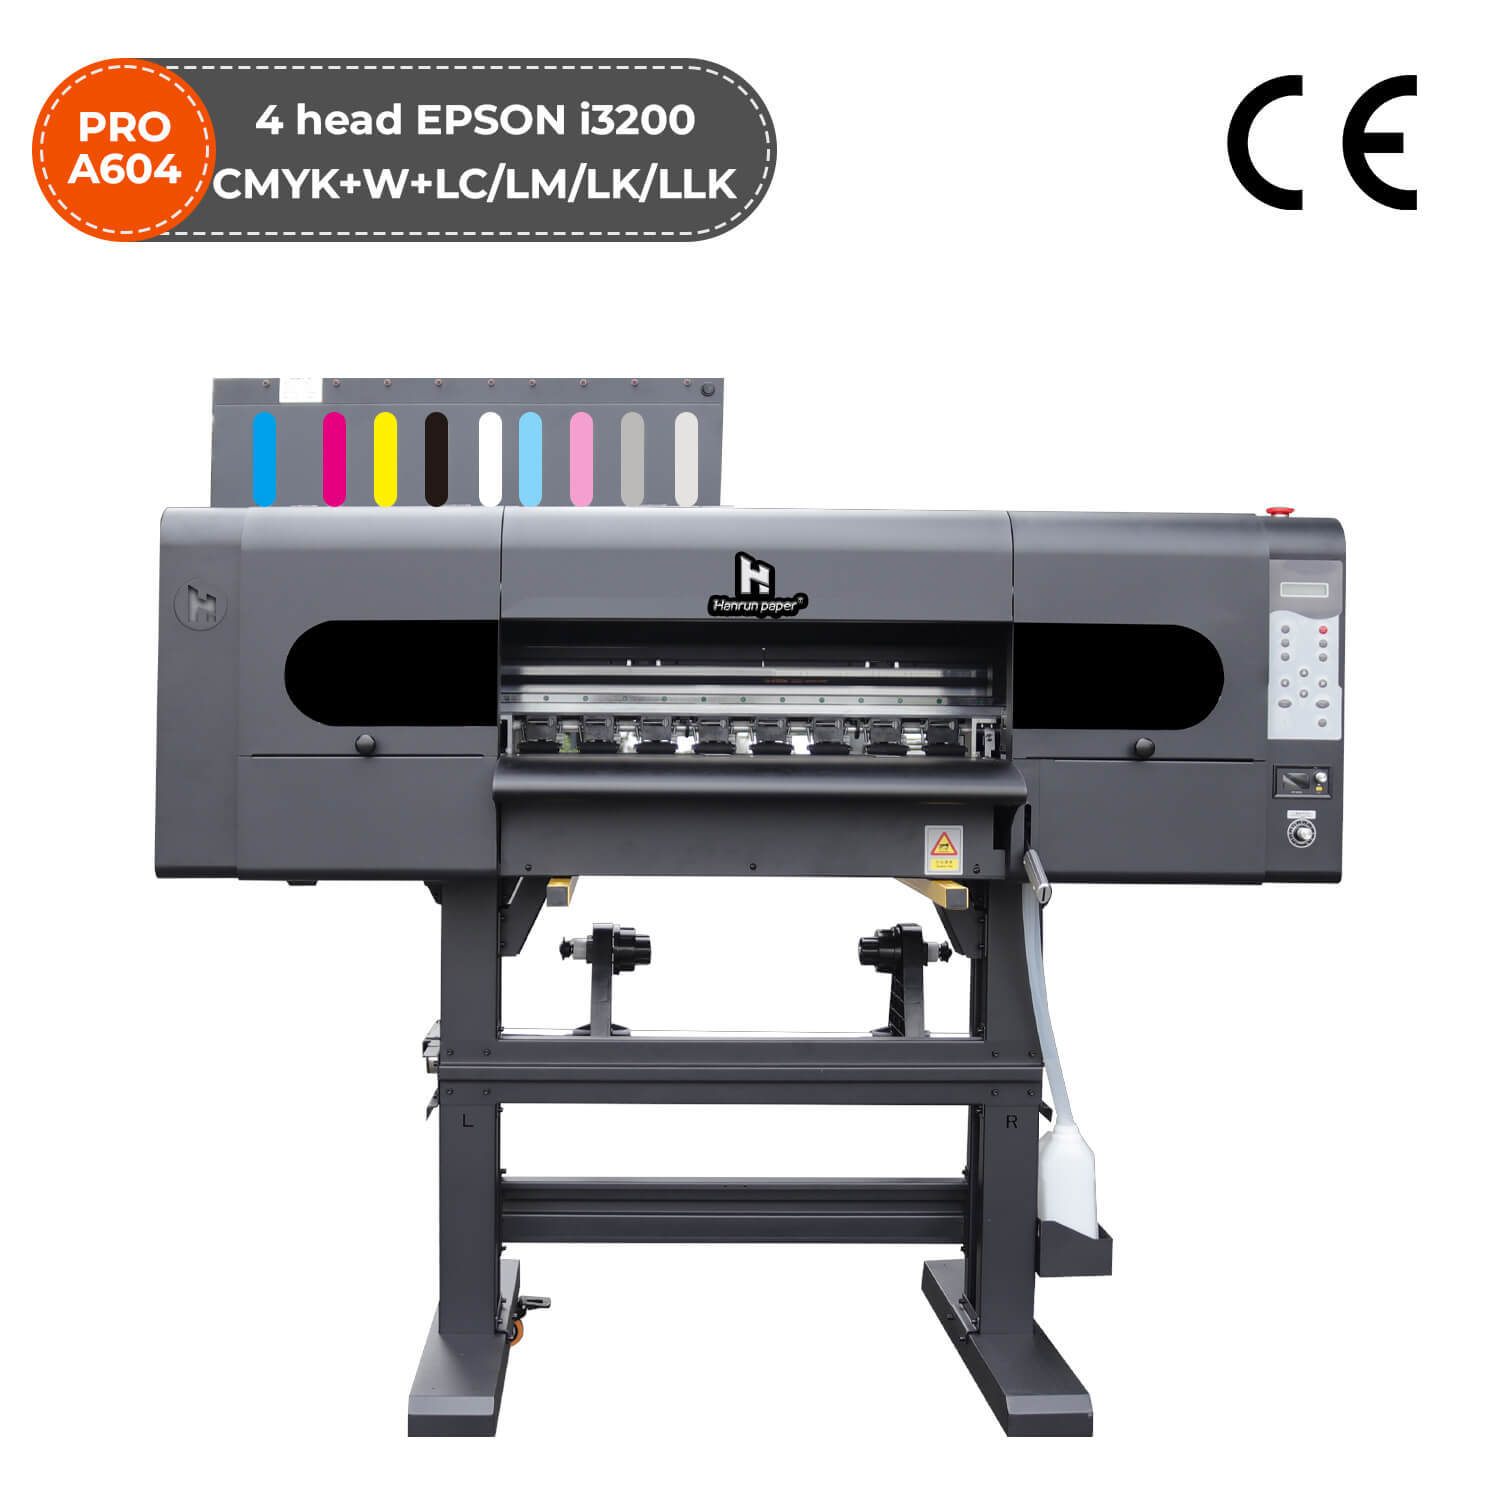 PRO A-604 DTF Printer (24